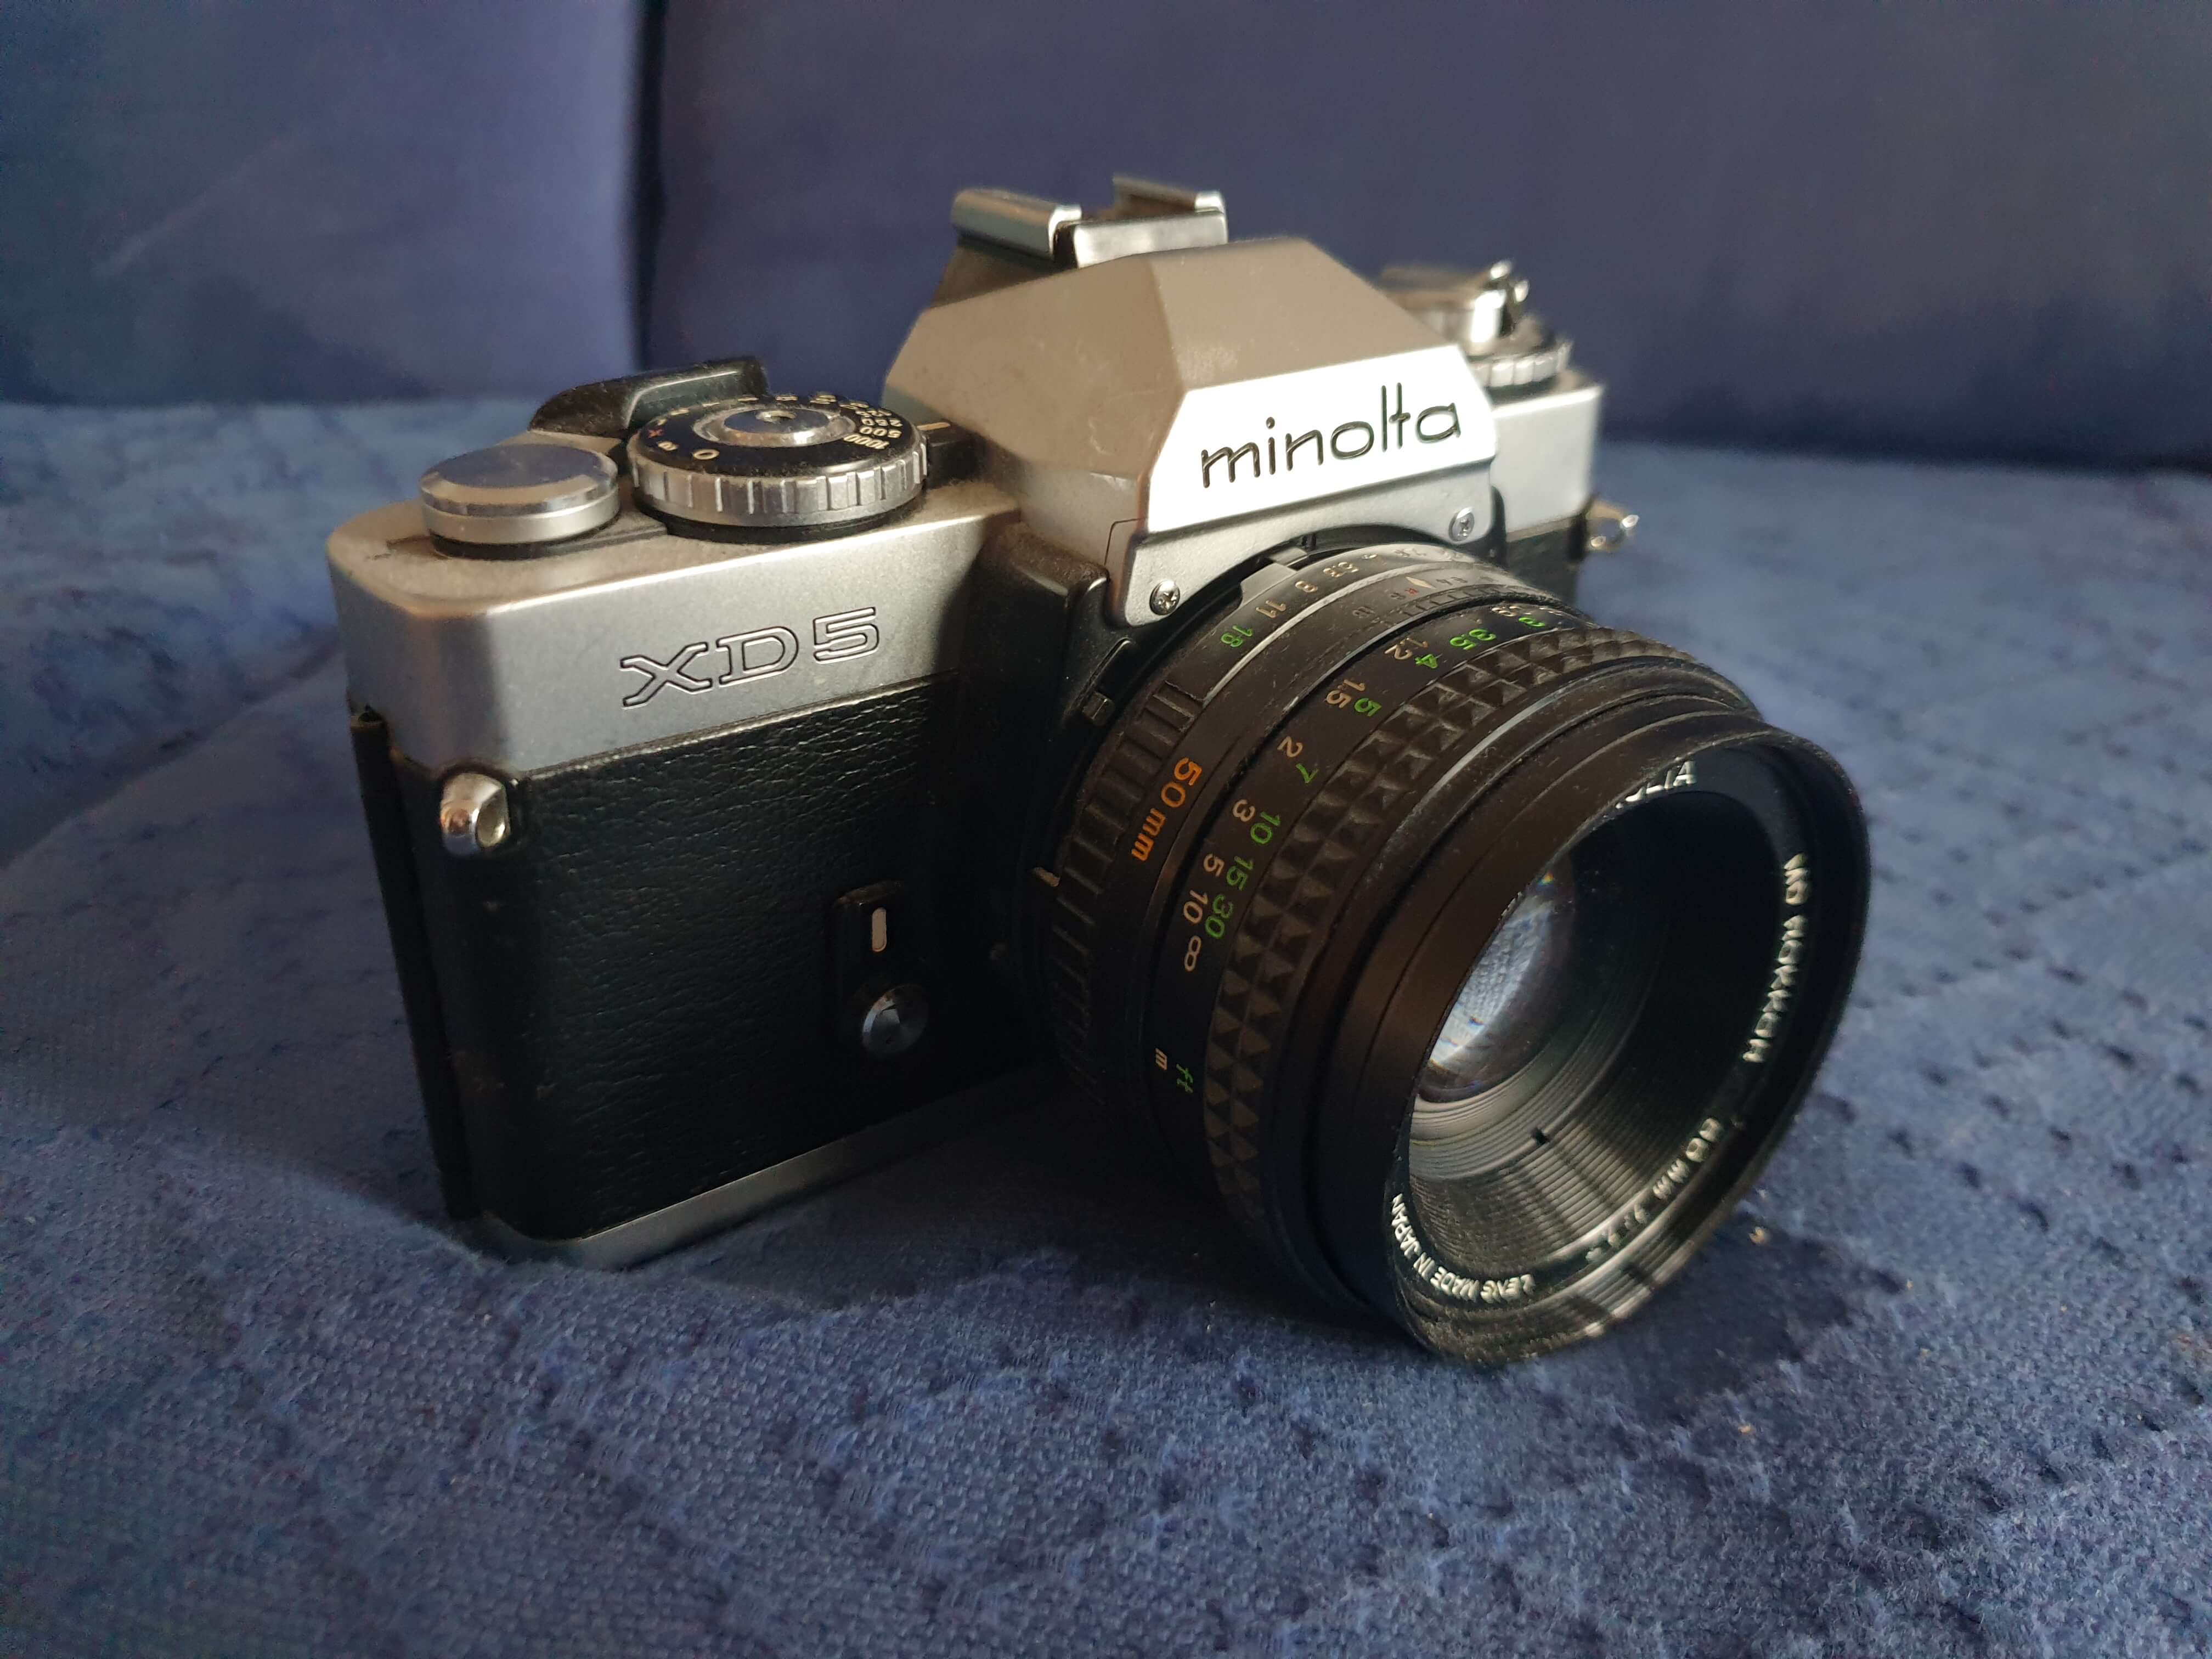 Minolta XD5 Spiegelreflexkamera analog - e26f1a23-a6fd-4c9b-8bf9-63259b814a6e